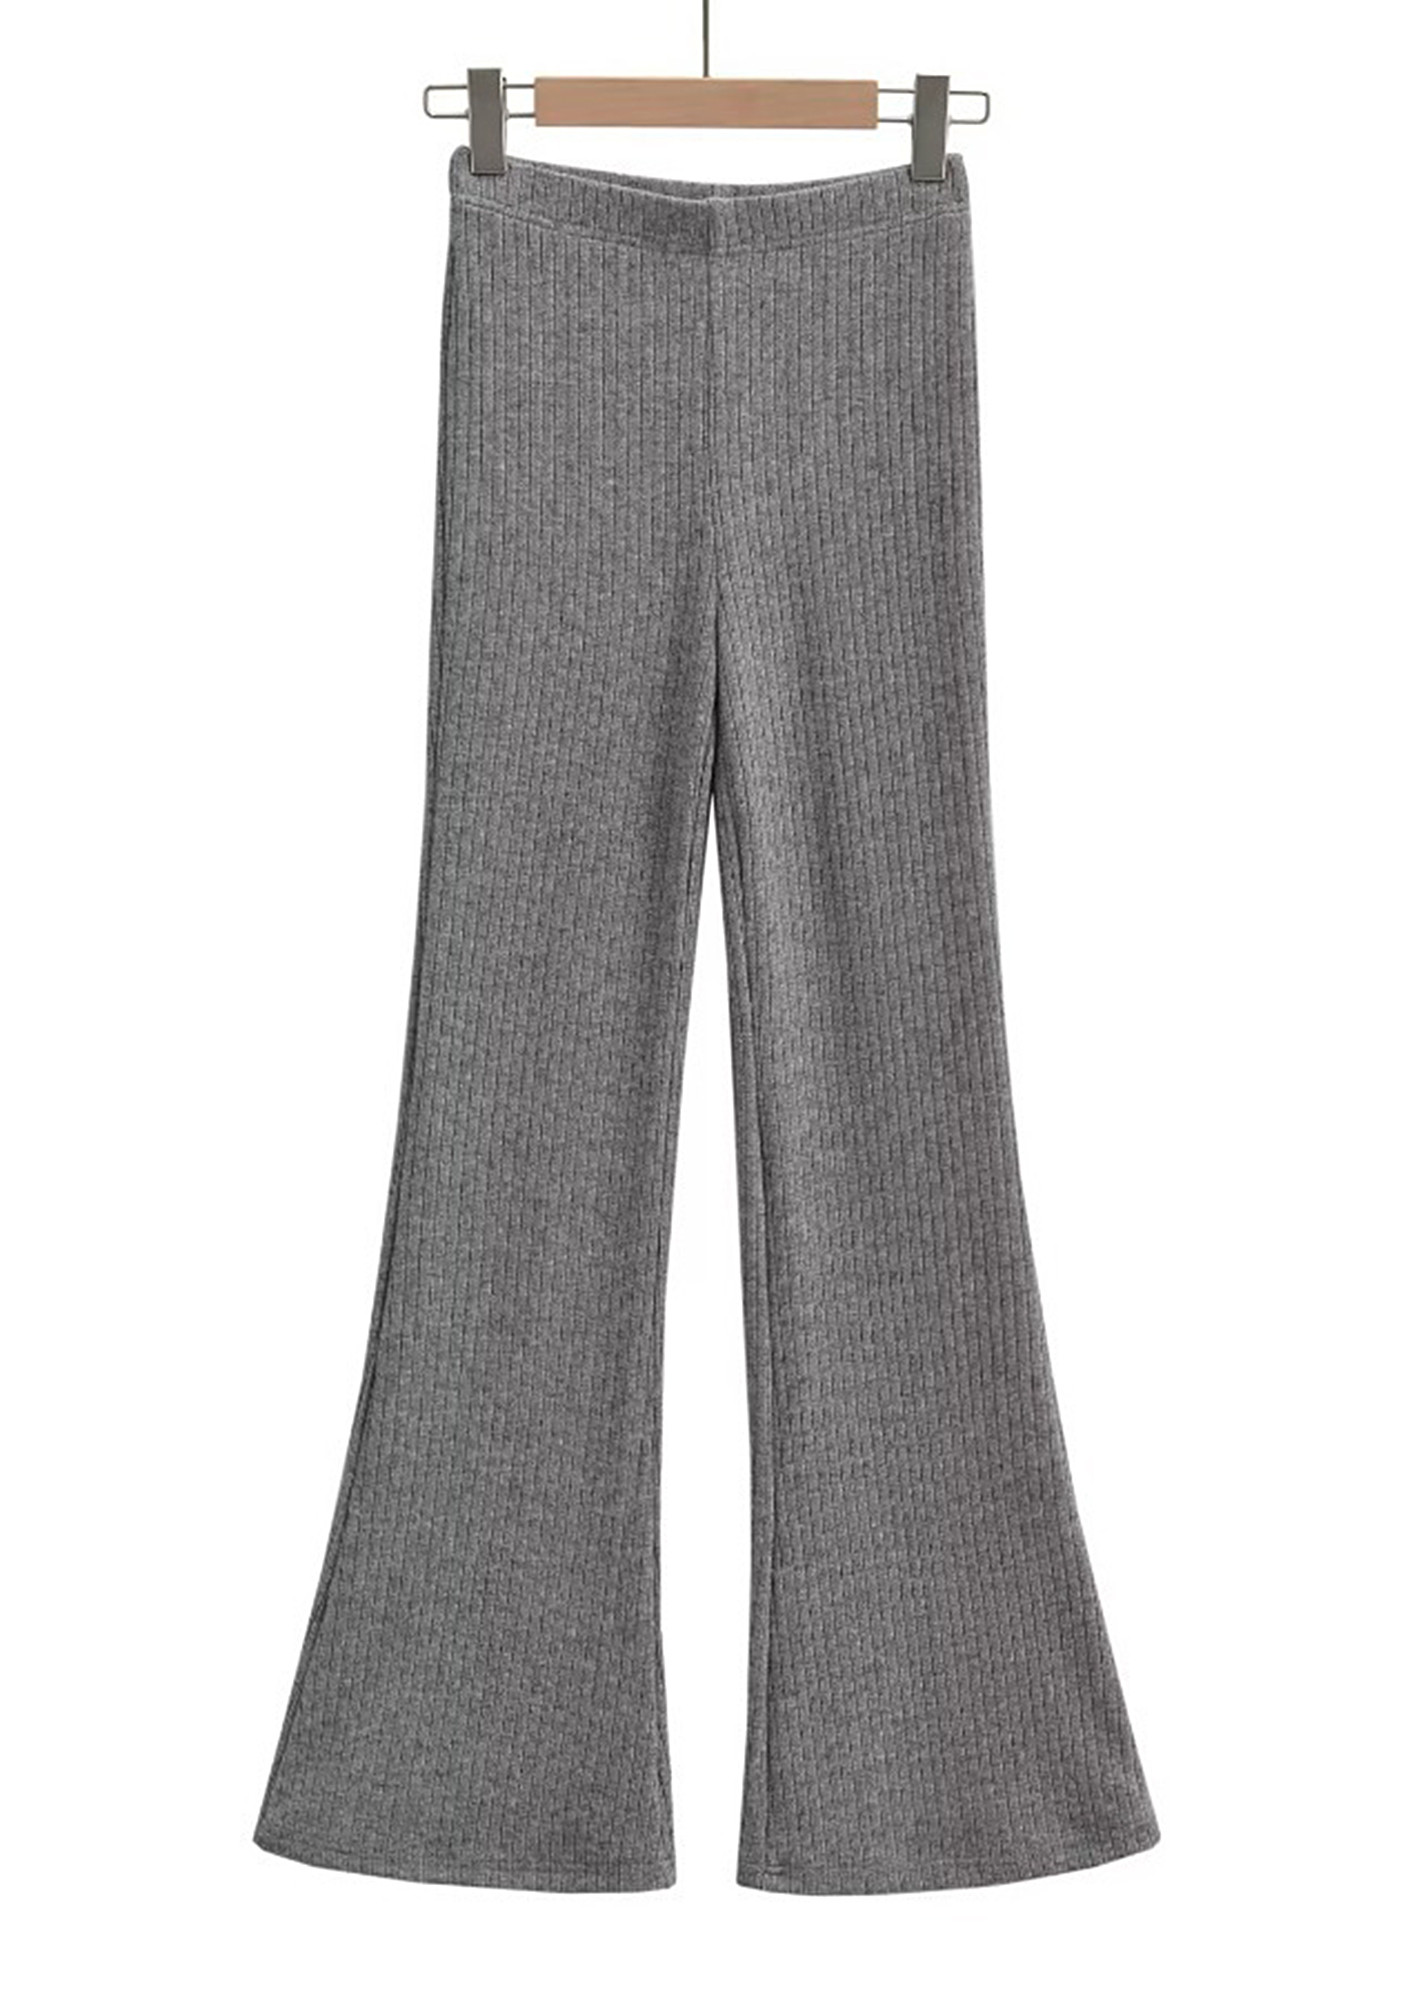 American-elm Light Grey Slim Fit Formal Trouser For Men, Cotton Formal  Pants For Office Wear at Rs 499.00 | Men Slim Formal Pants | ID:  2850304858688